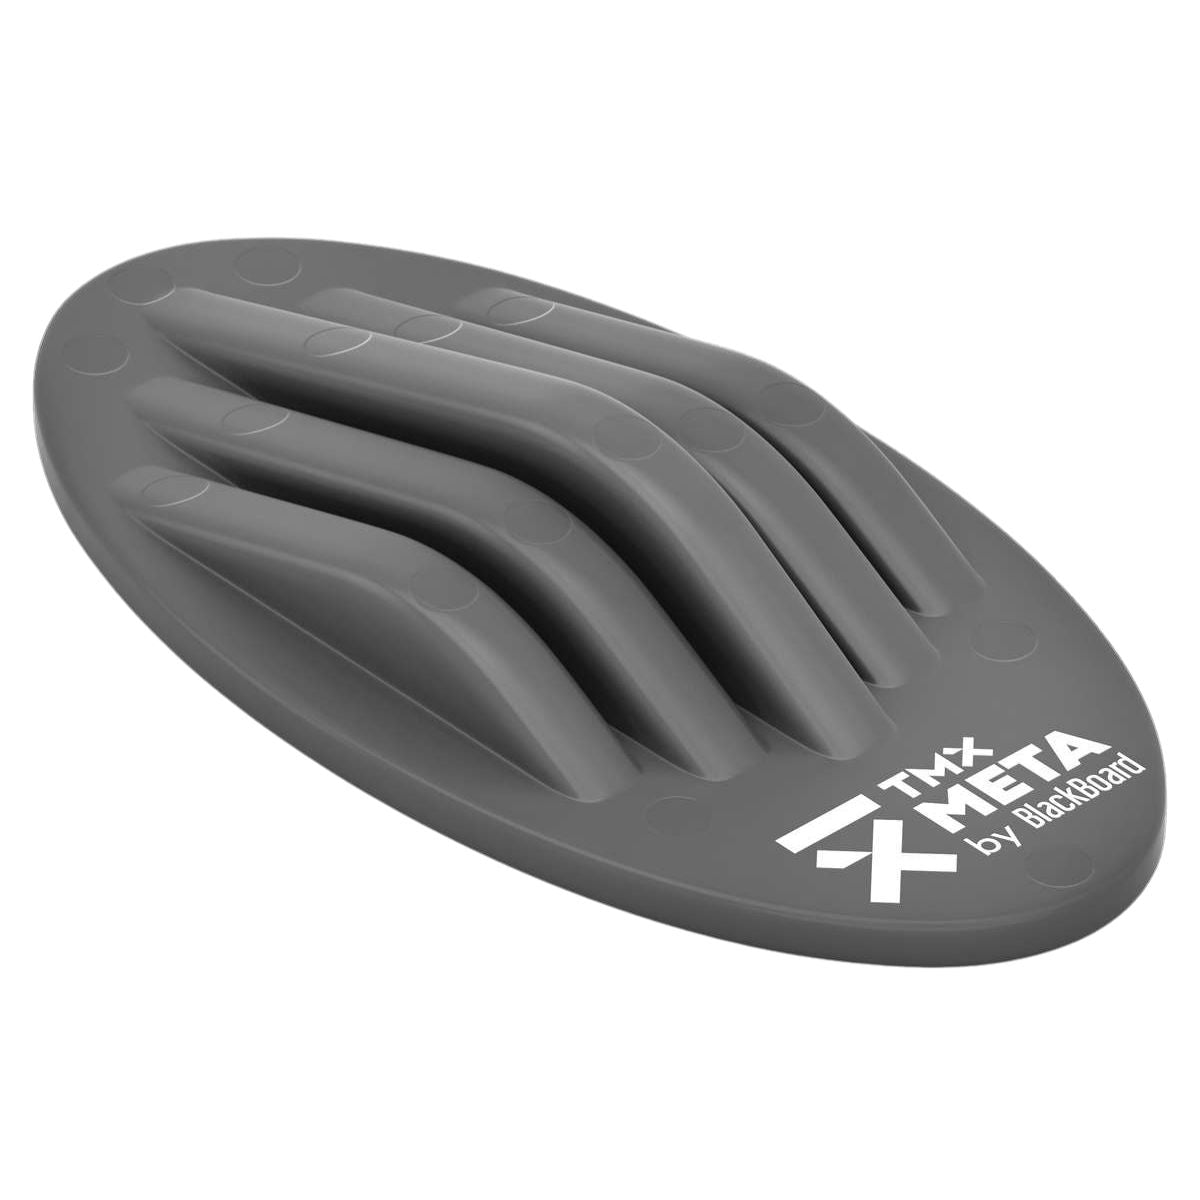 TMX® Meta Fuß-Mobilisator